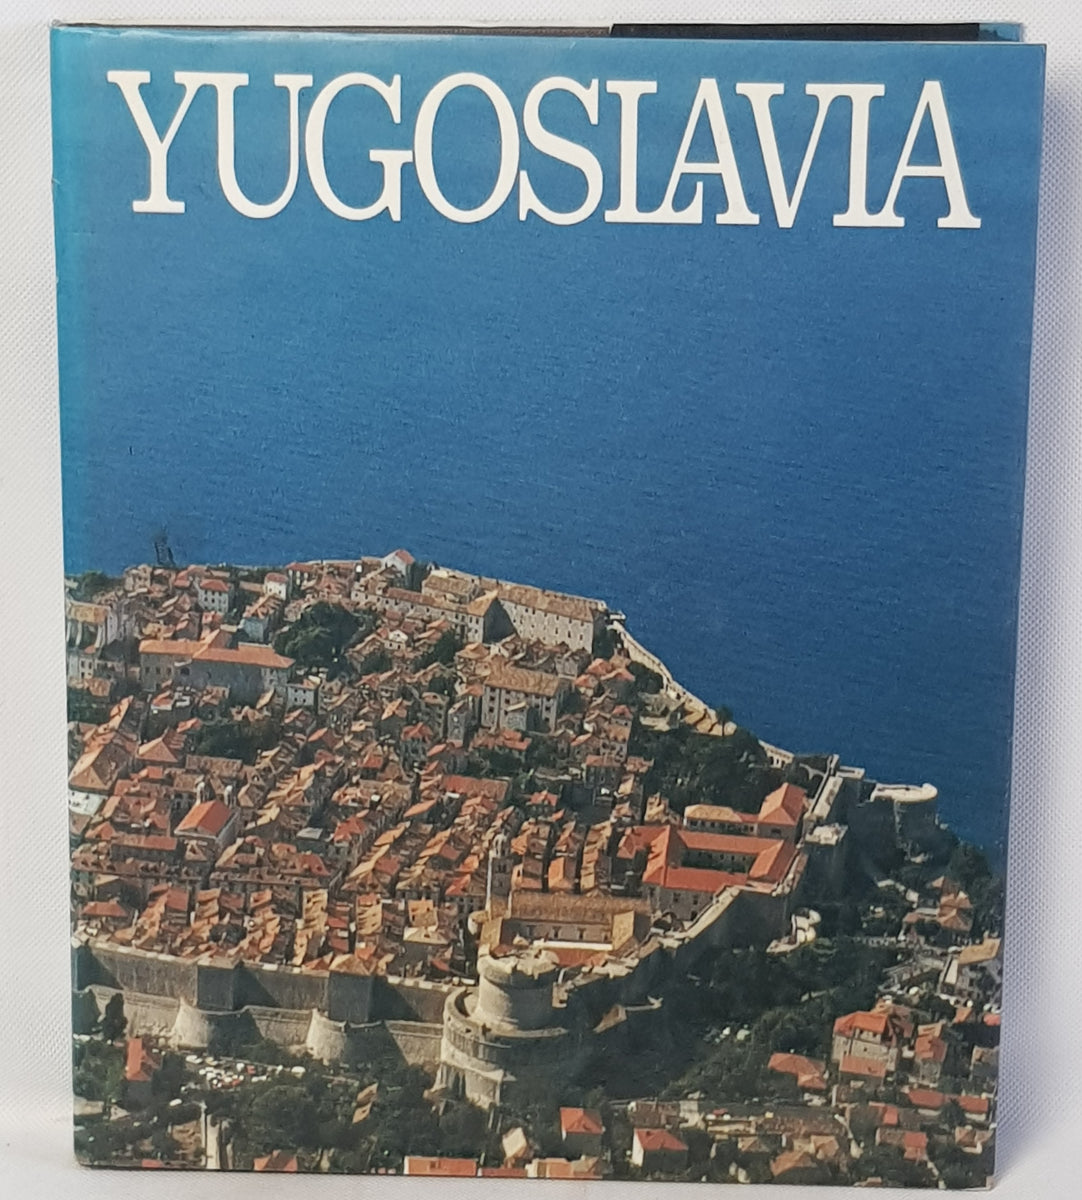 Yugoslavia Republics And Provinces by Bobot, Rajko (editor) – Our